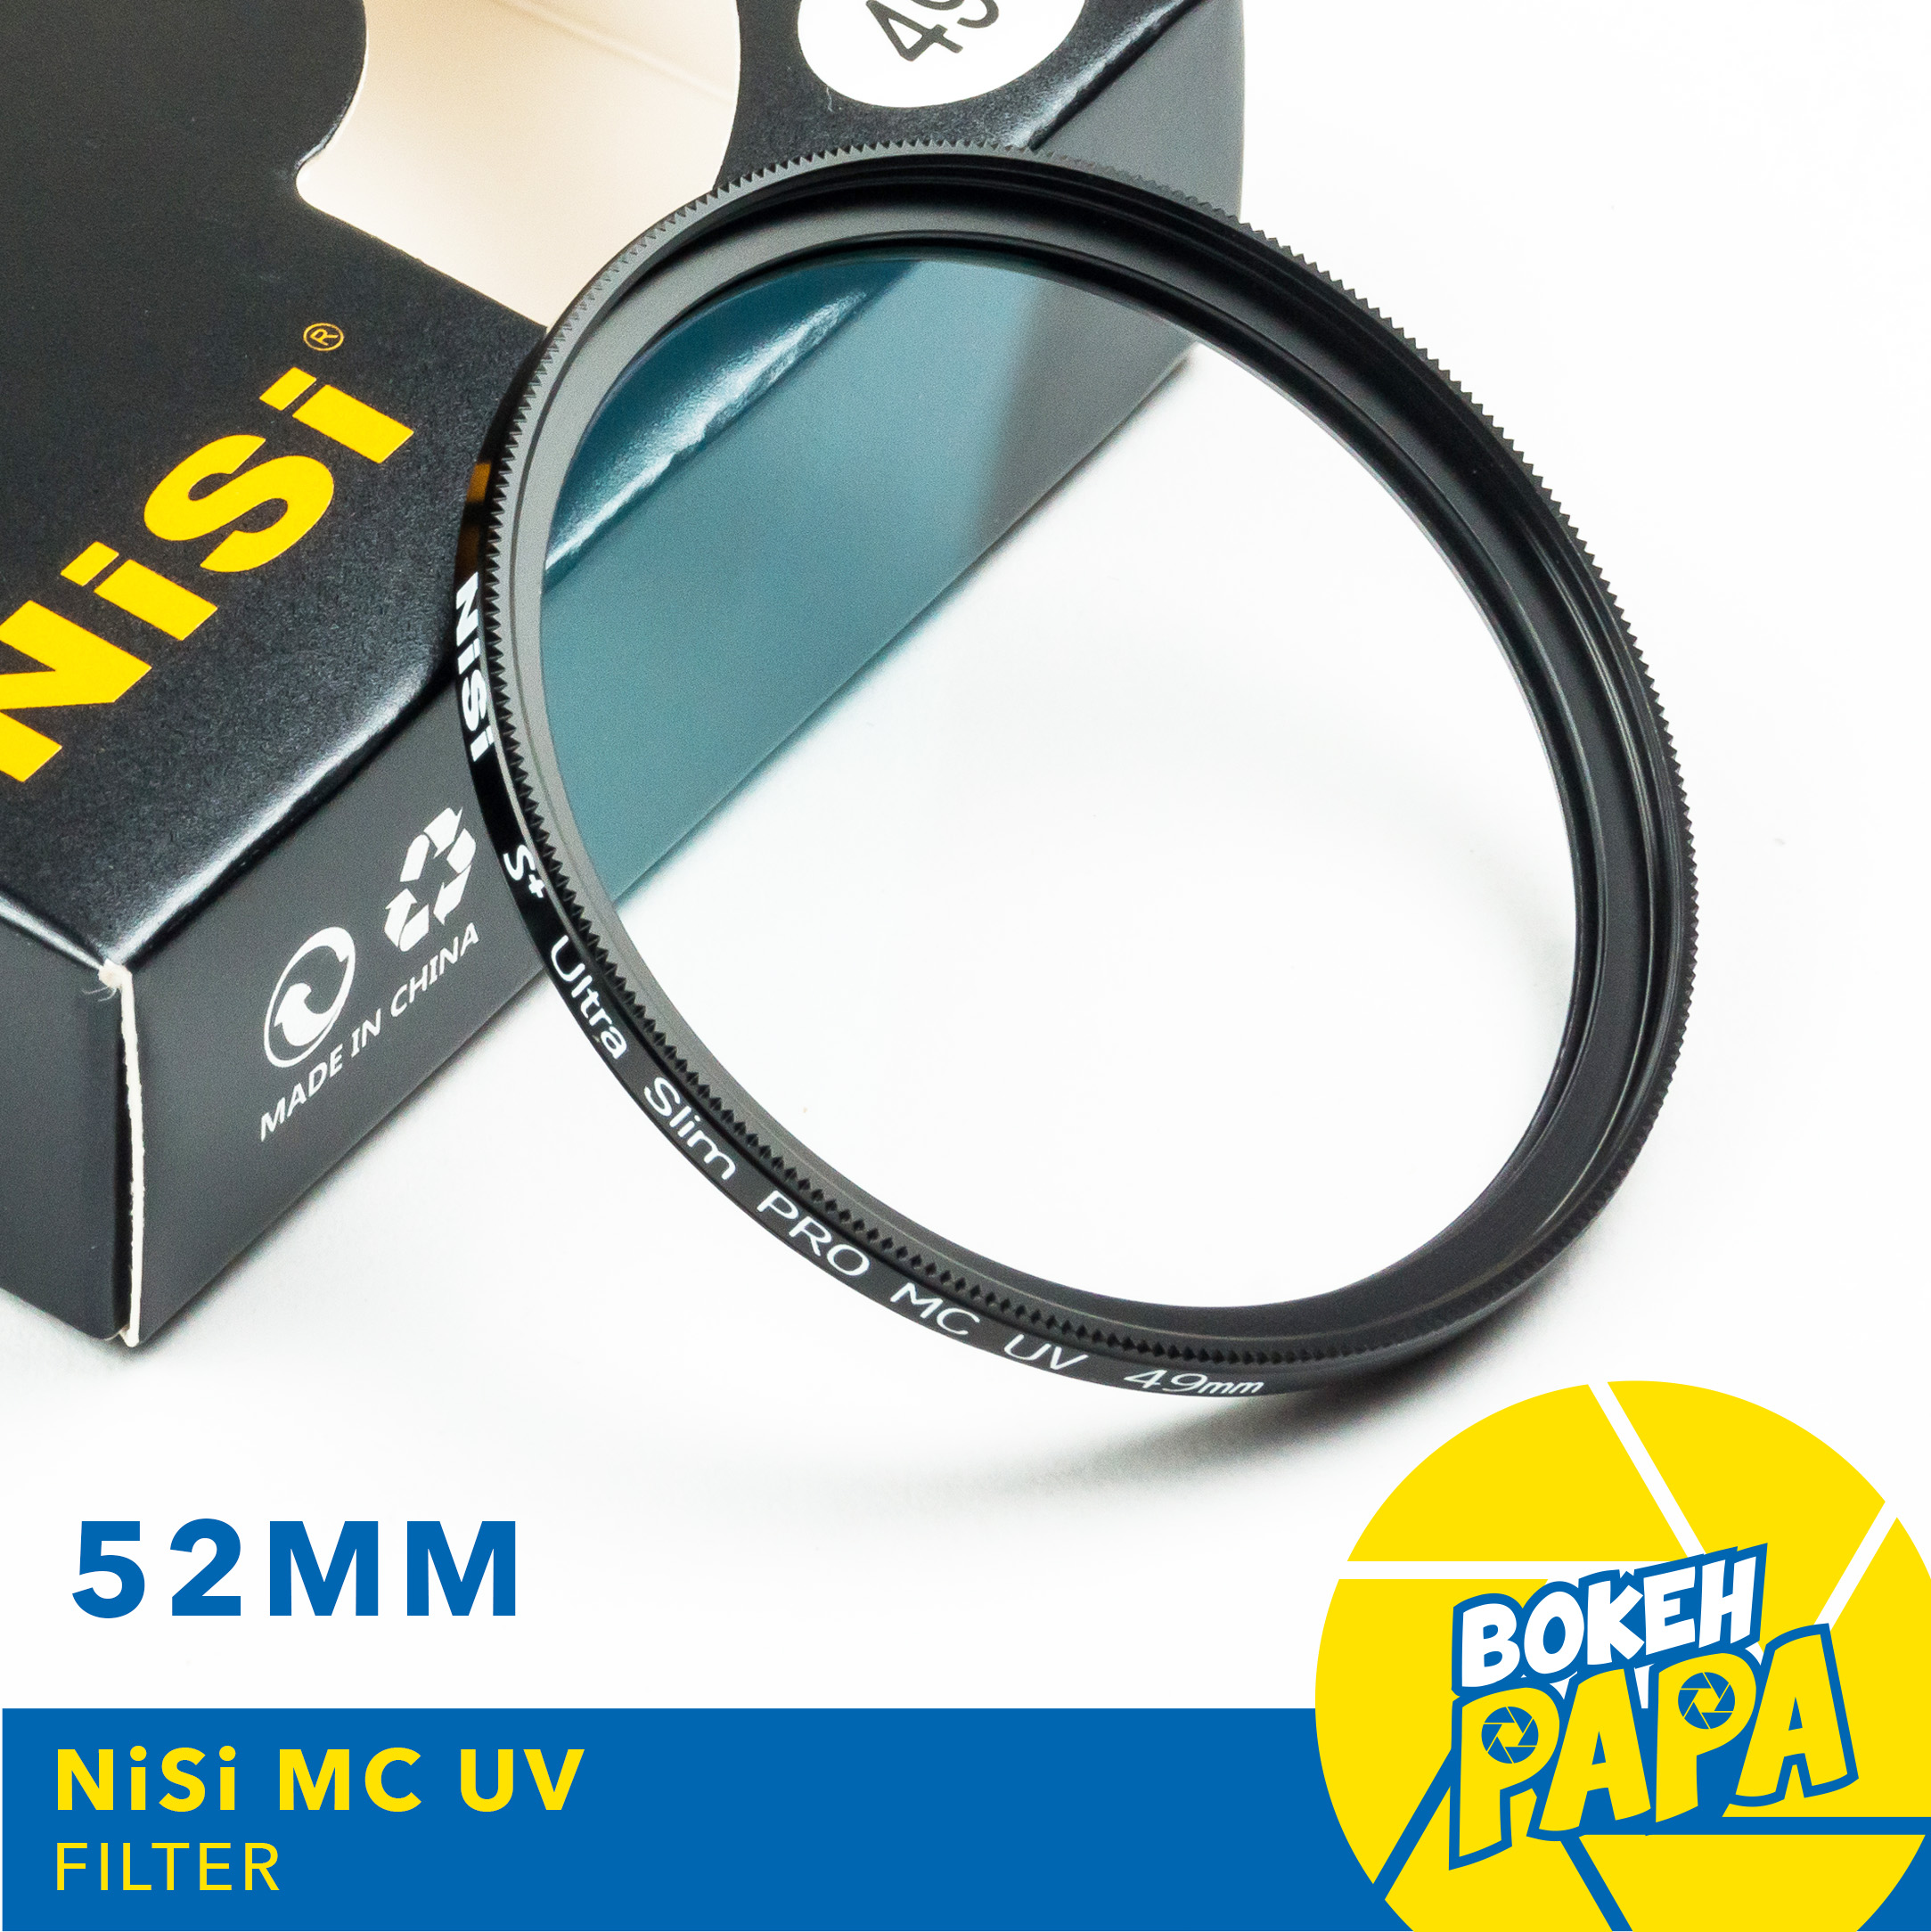 NISI 52mm MC UV Filter ที่กรองรังสียูวีโซด์ขนาดบางเป็นพิเศษ Professional ตัวกรองยูวีด้านคู่ 12 การเคลือบหลายชั้นกรอง ( NISI MC UV Filter 52mm )( ฟิลเตอร์ 52 มิลลิเมตร บางพิเศษ )